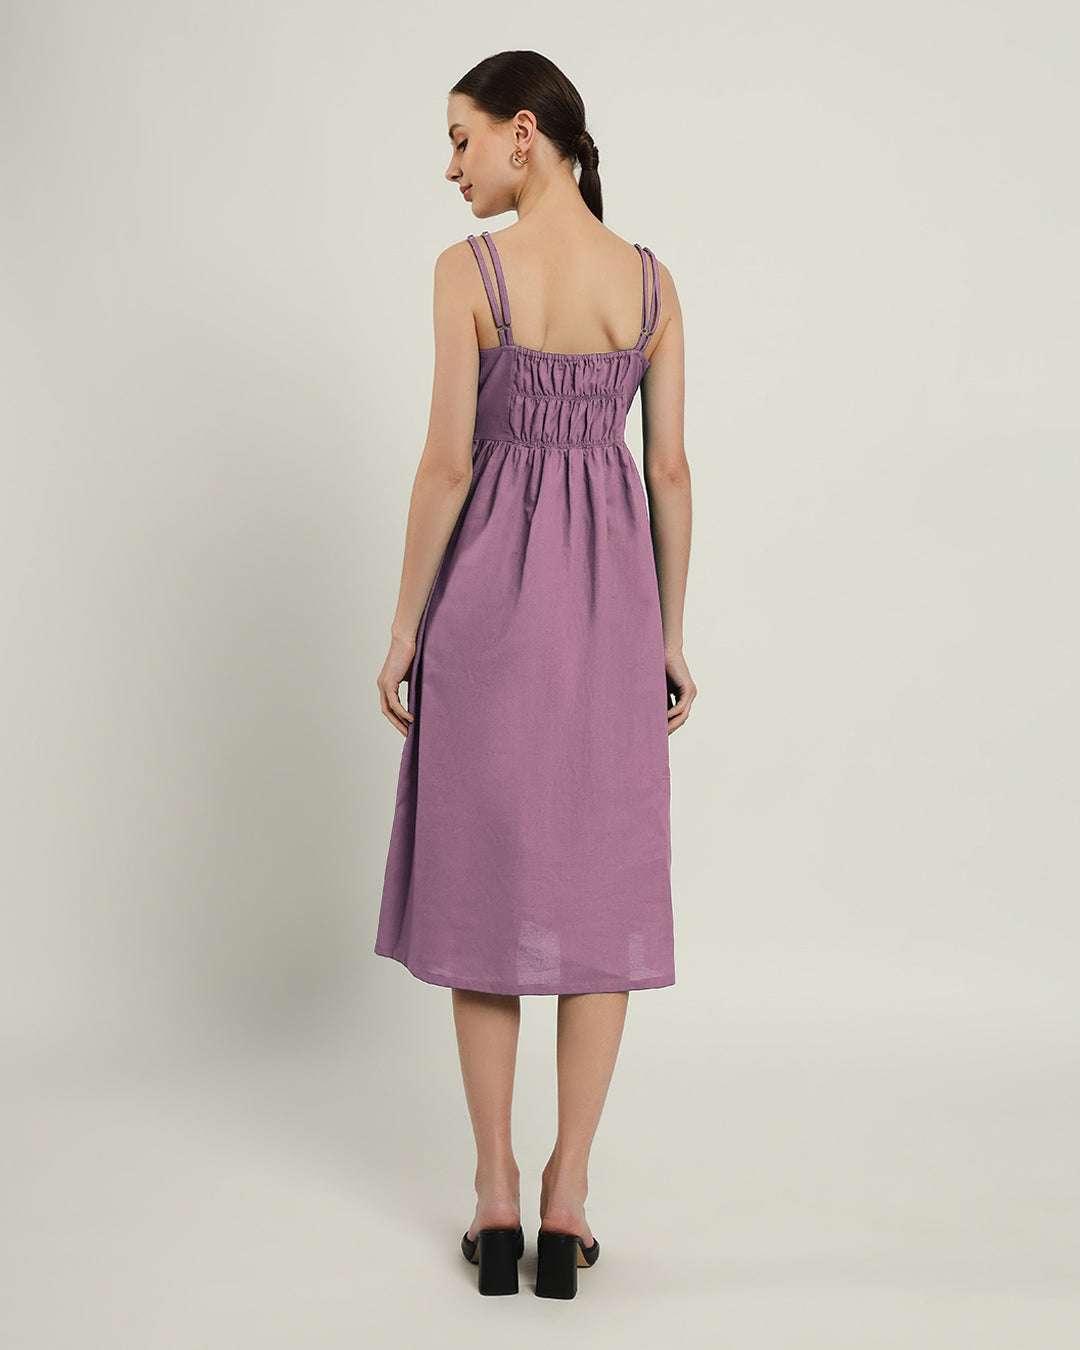 The Haiti Purple Swirl Cotton Dress